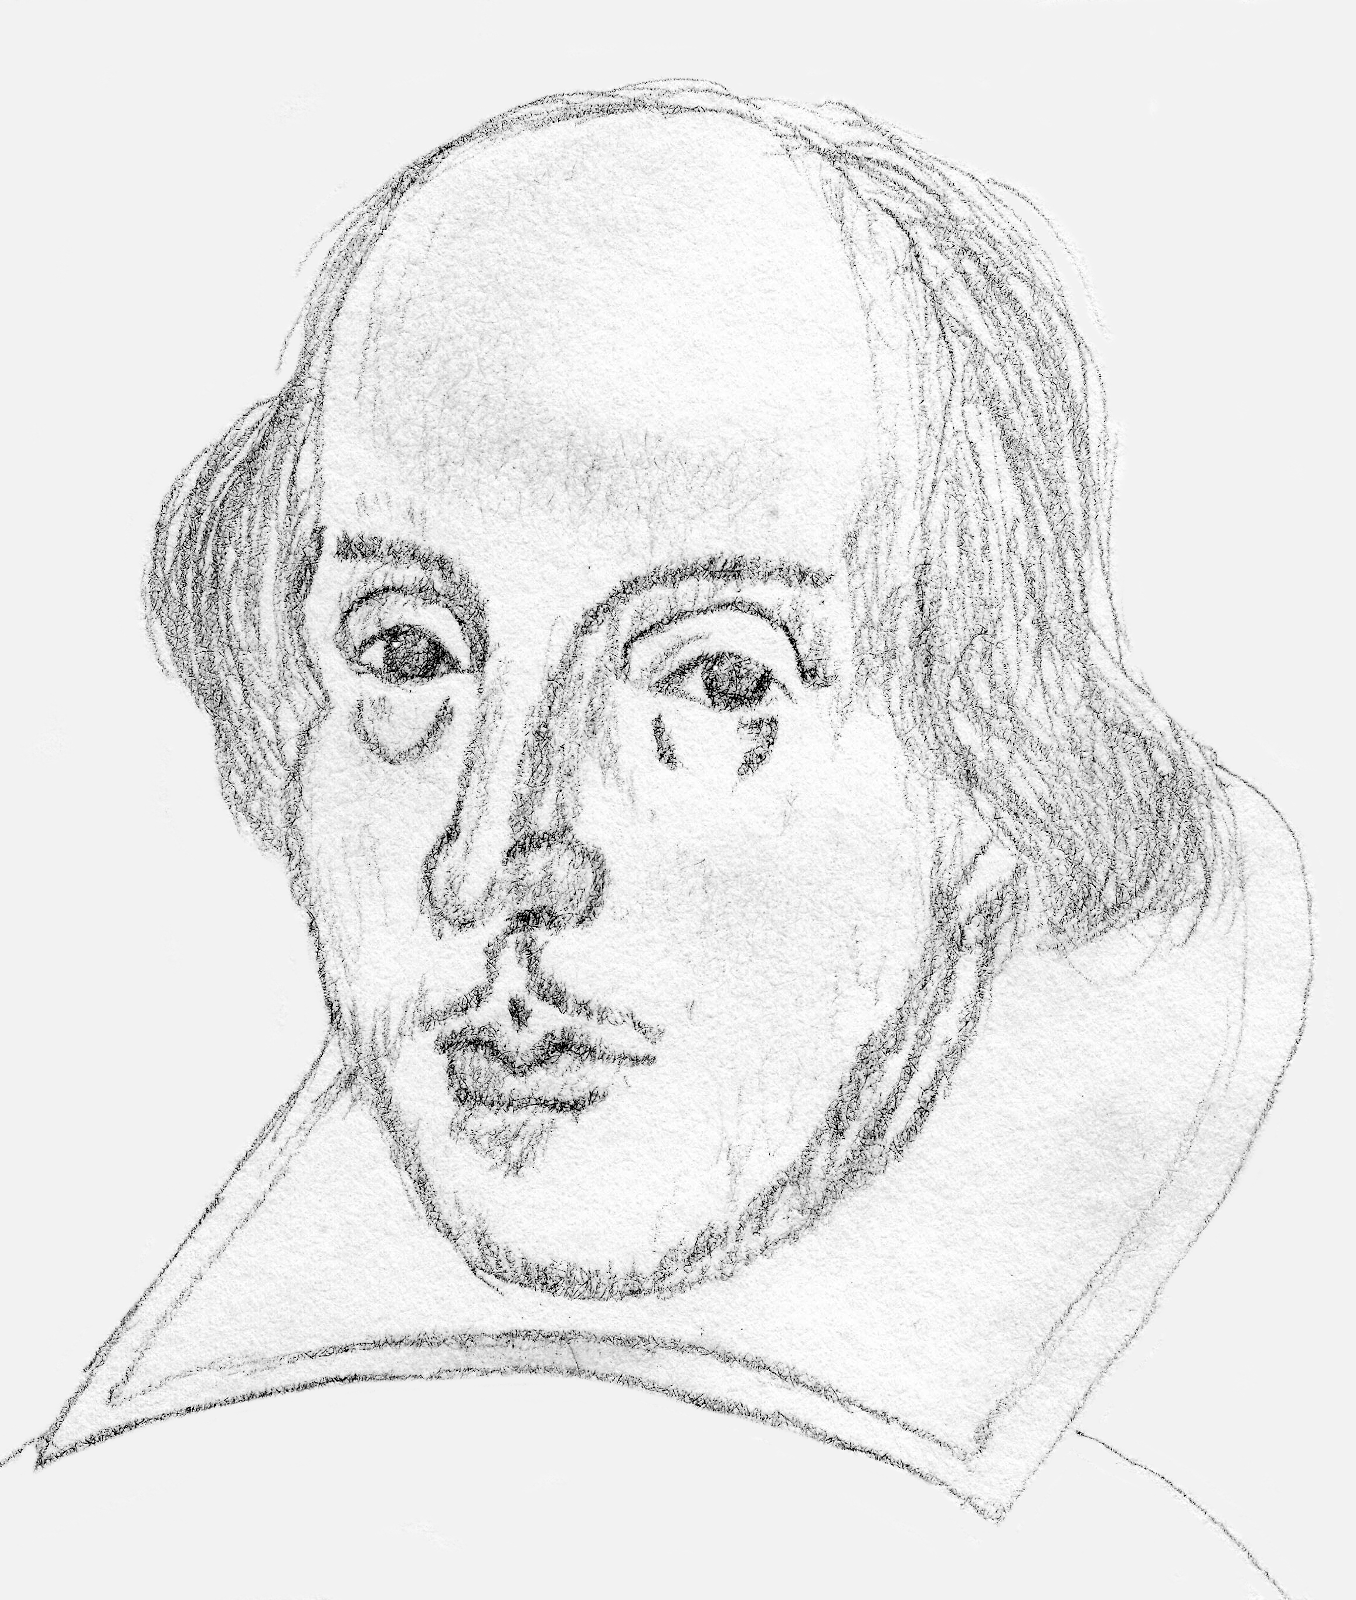 Sketch of William Shakespeare